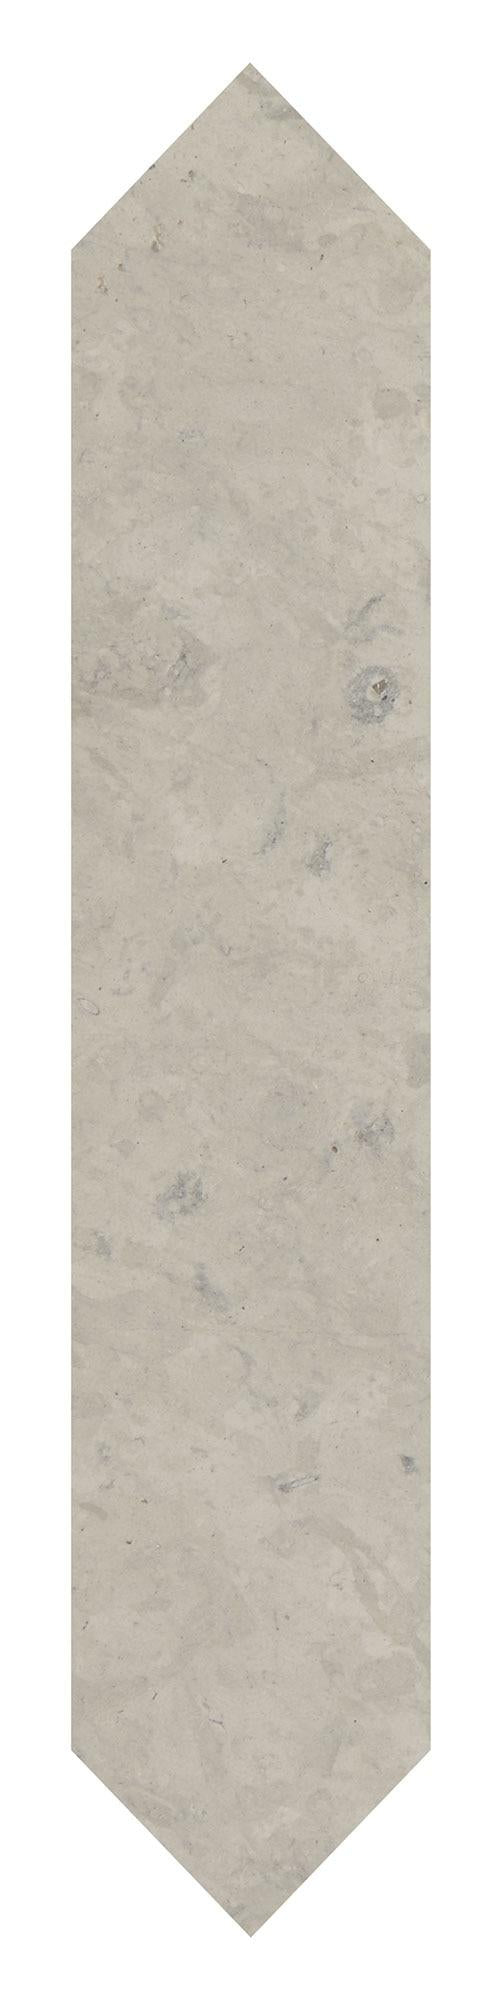 Volcanic Gray Limestone Tile 3x15 Honed   3/8 inch